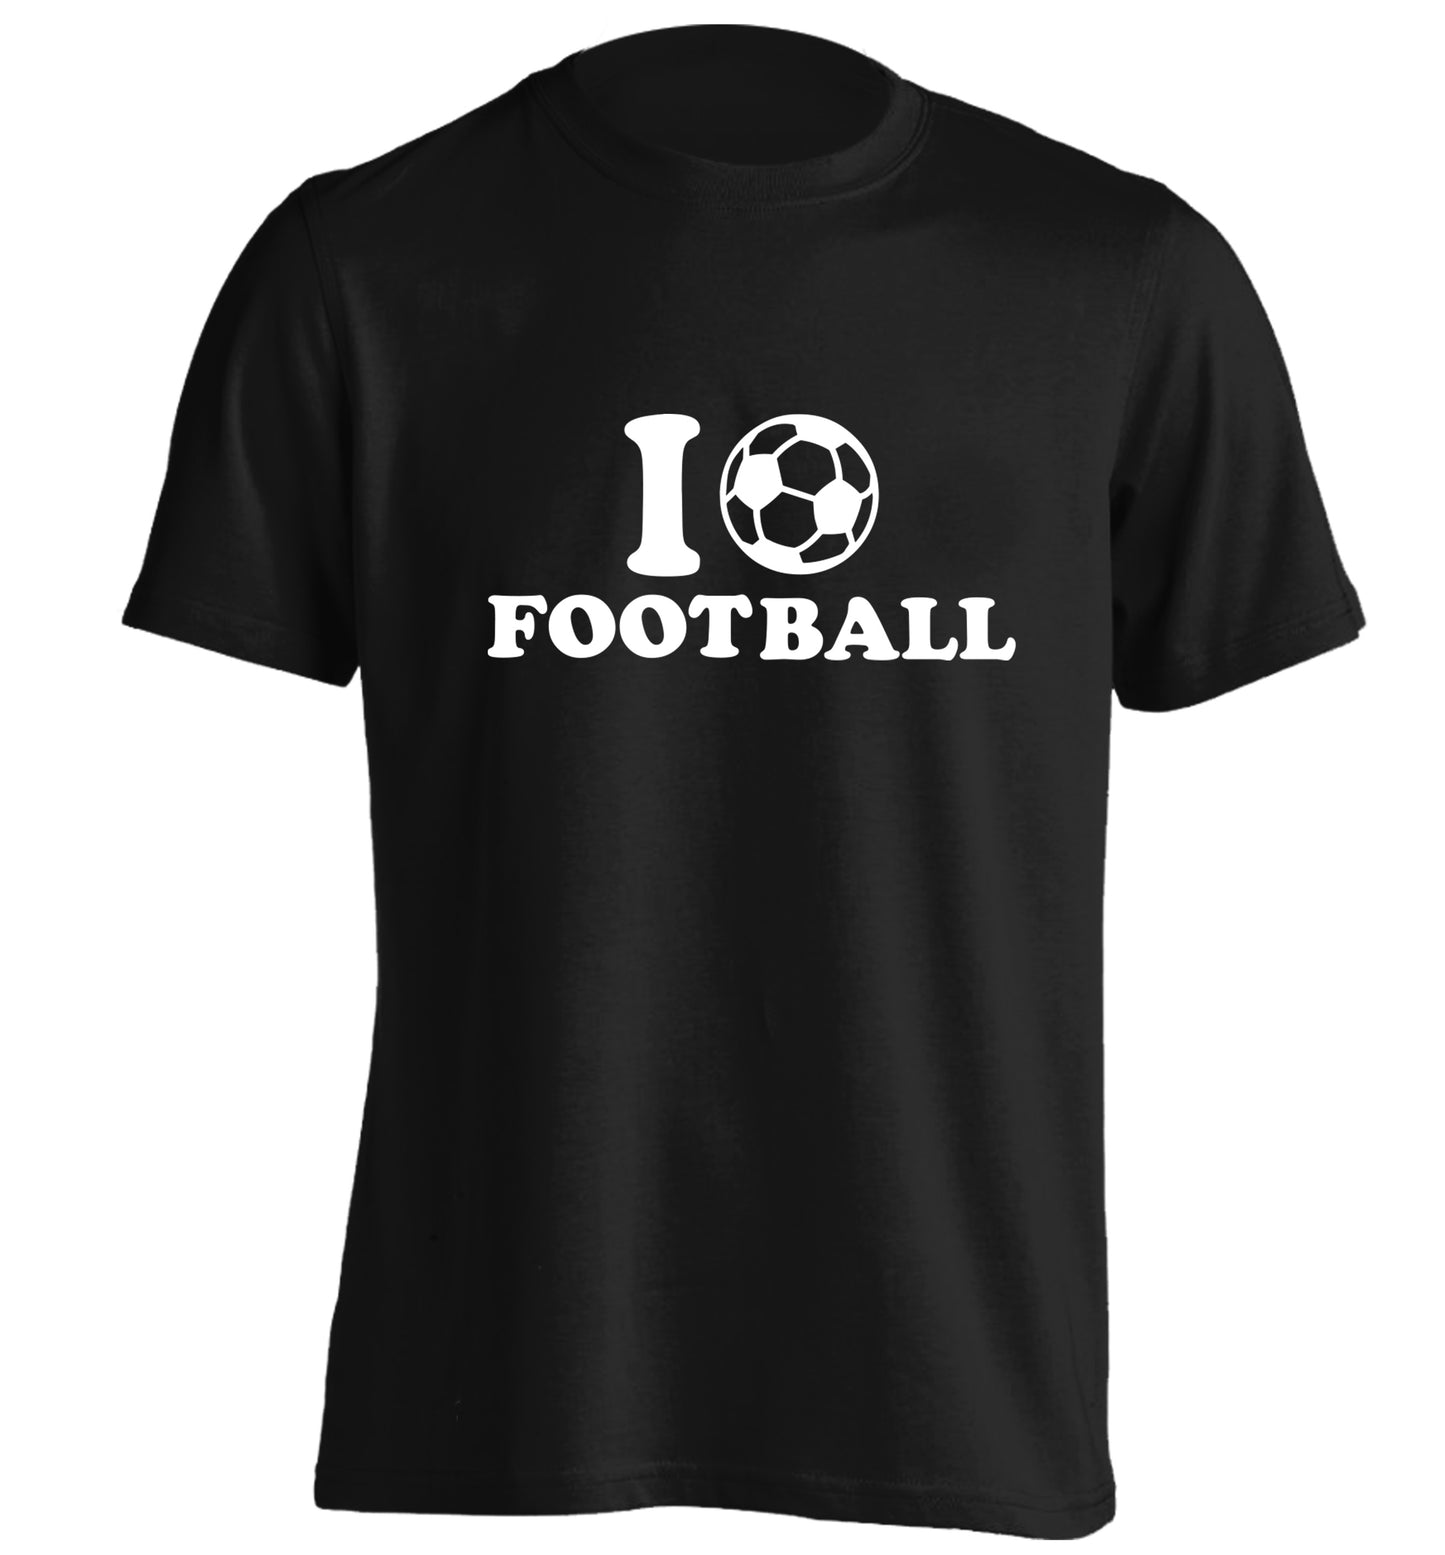 I love football adults unisexblack Tshirt 2XL